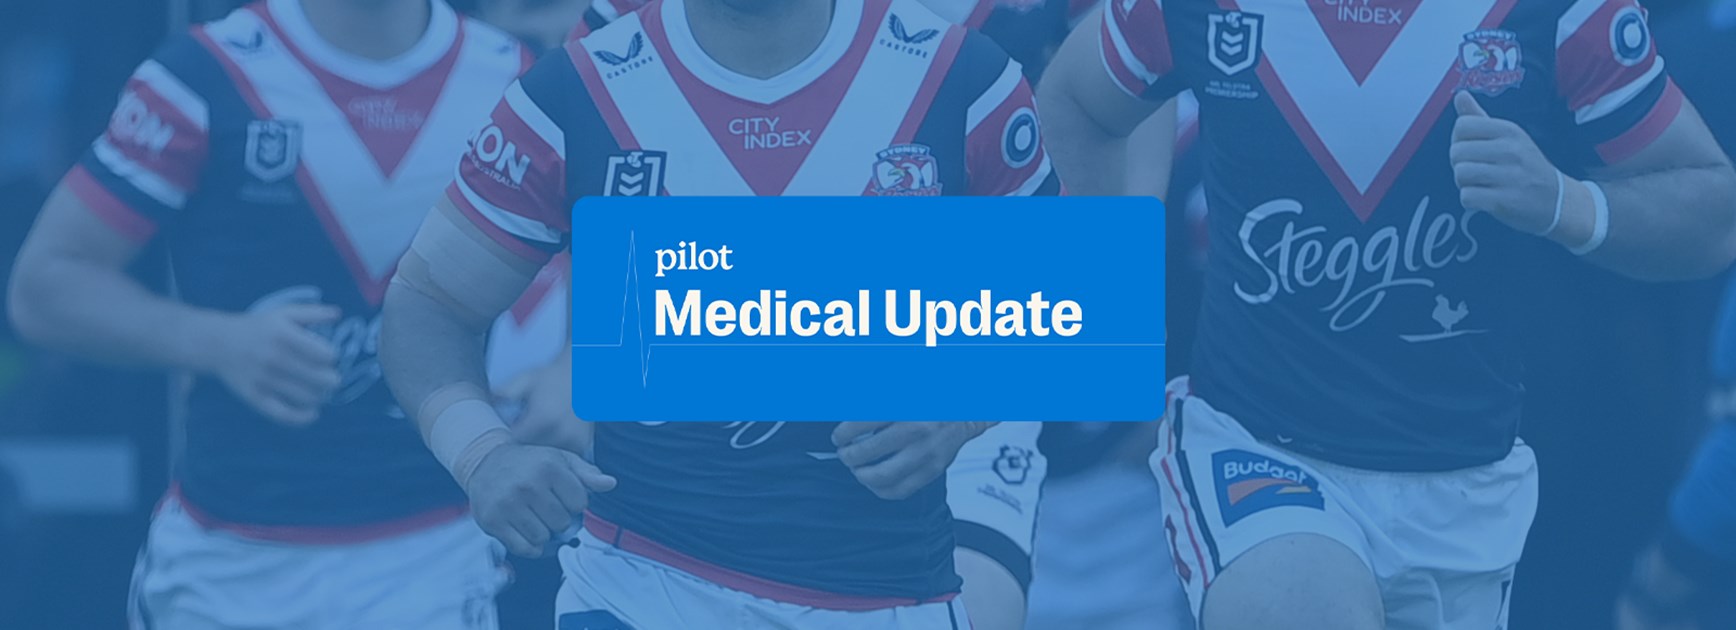 Pilot Medical Update: Round 3